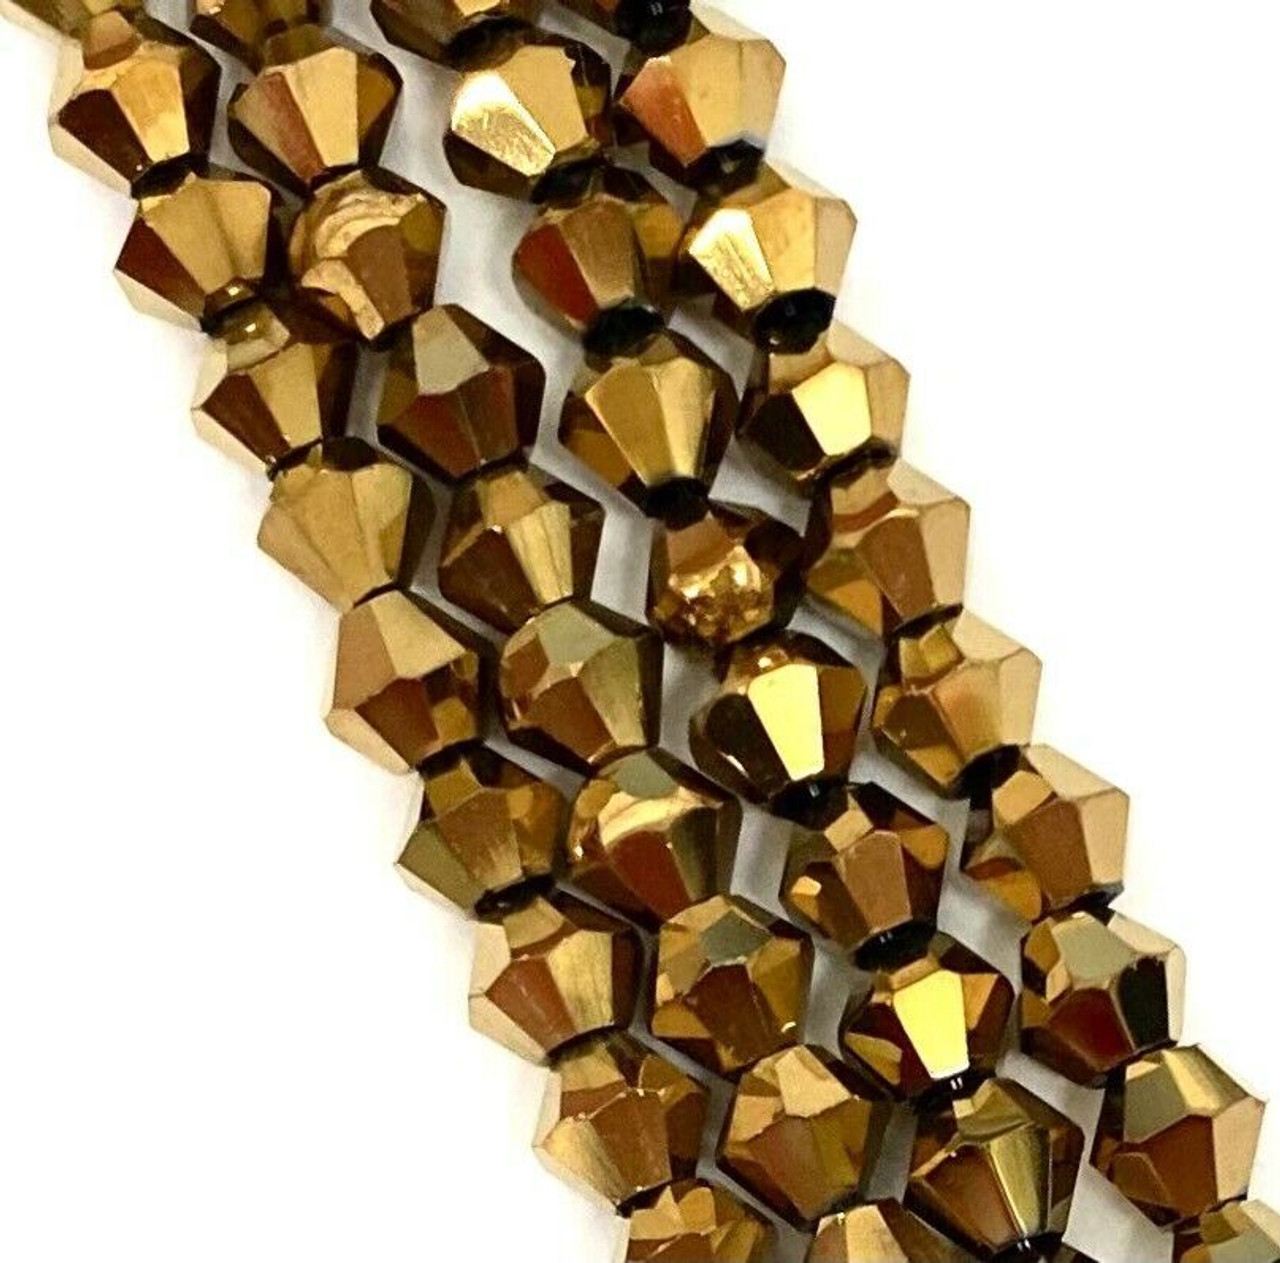 4mm Glass Bicone beads - BRONZE METALLIC - approx 16" strand (110-120 beads)